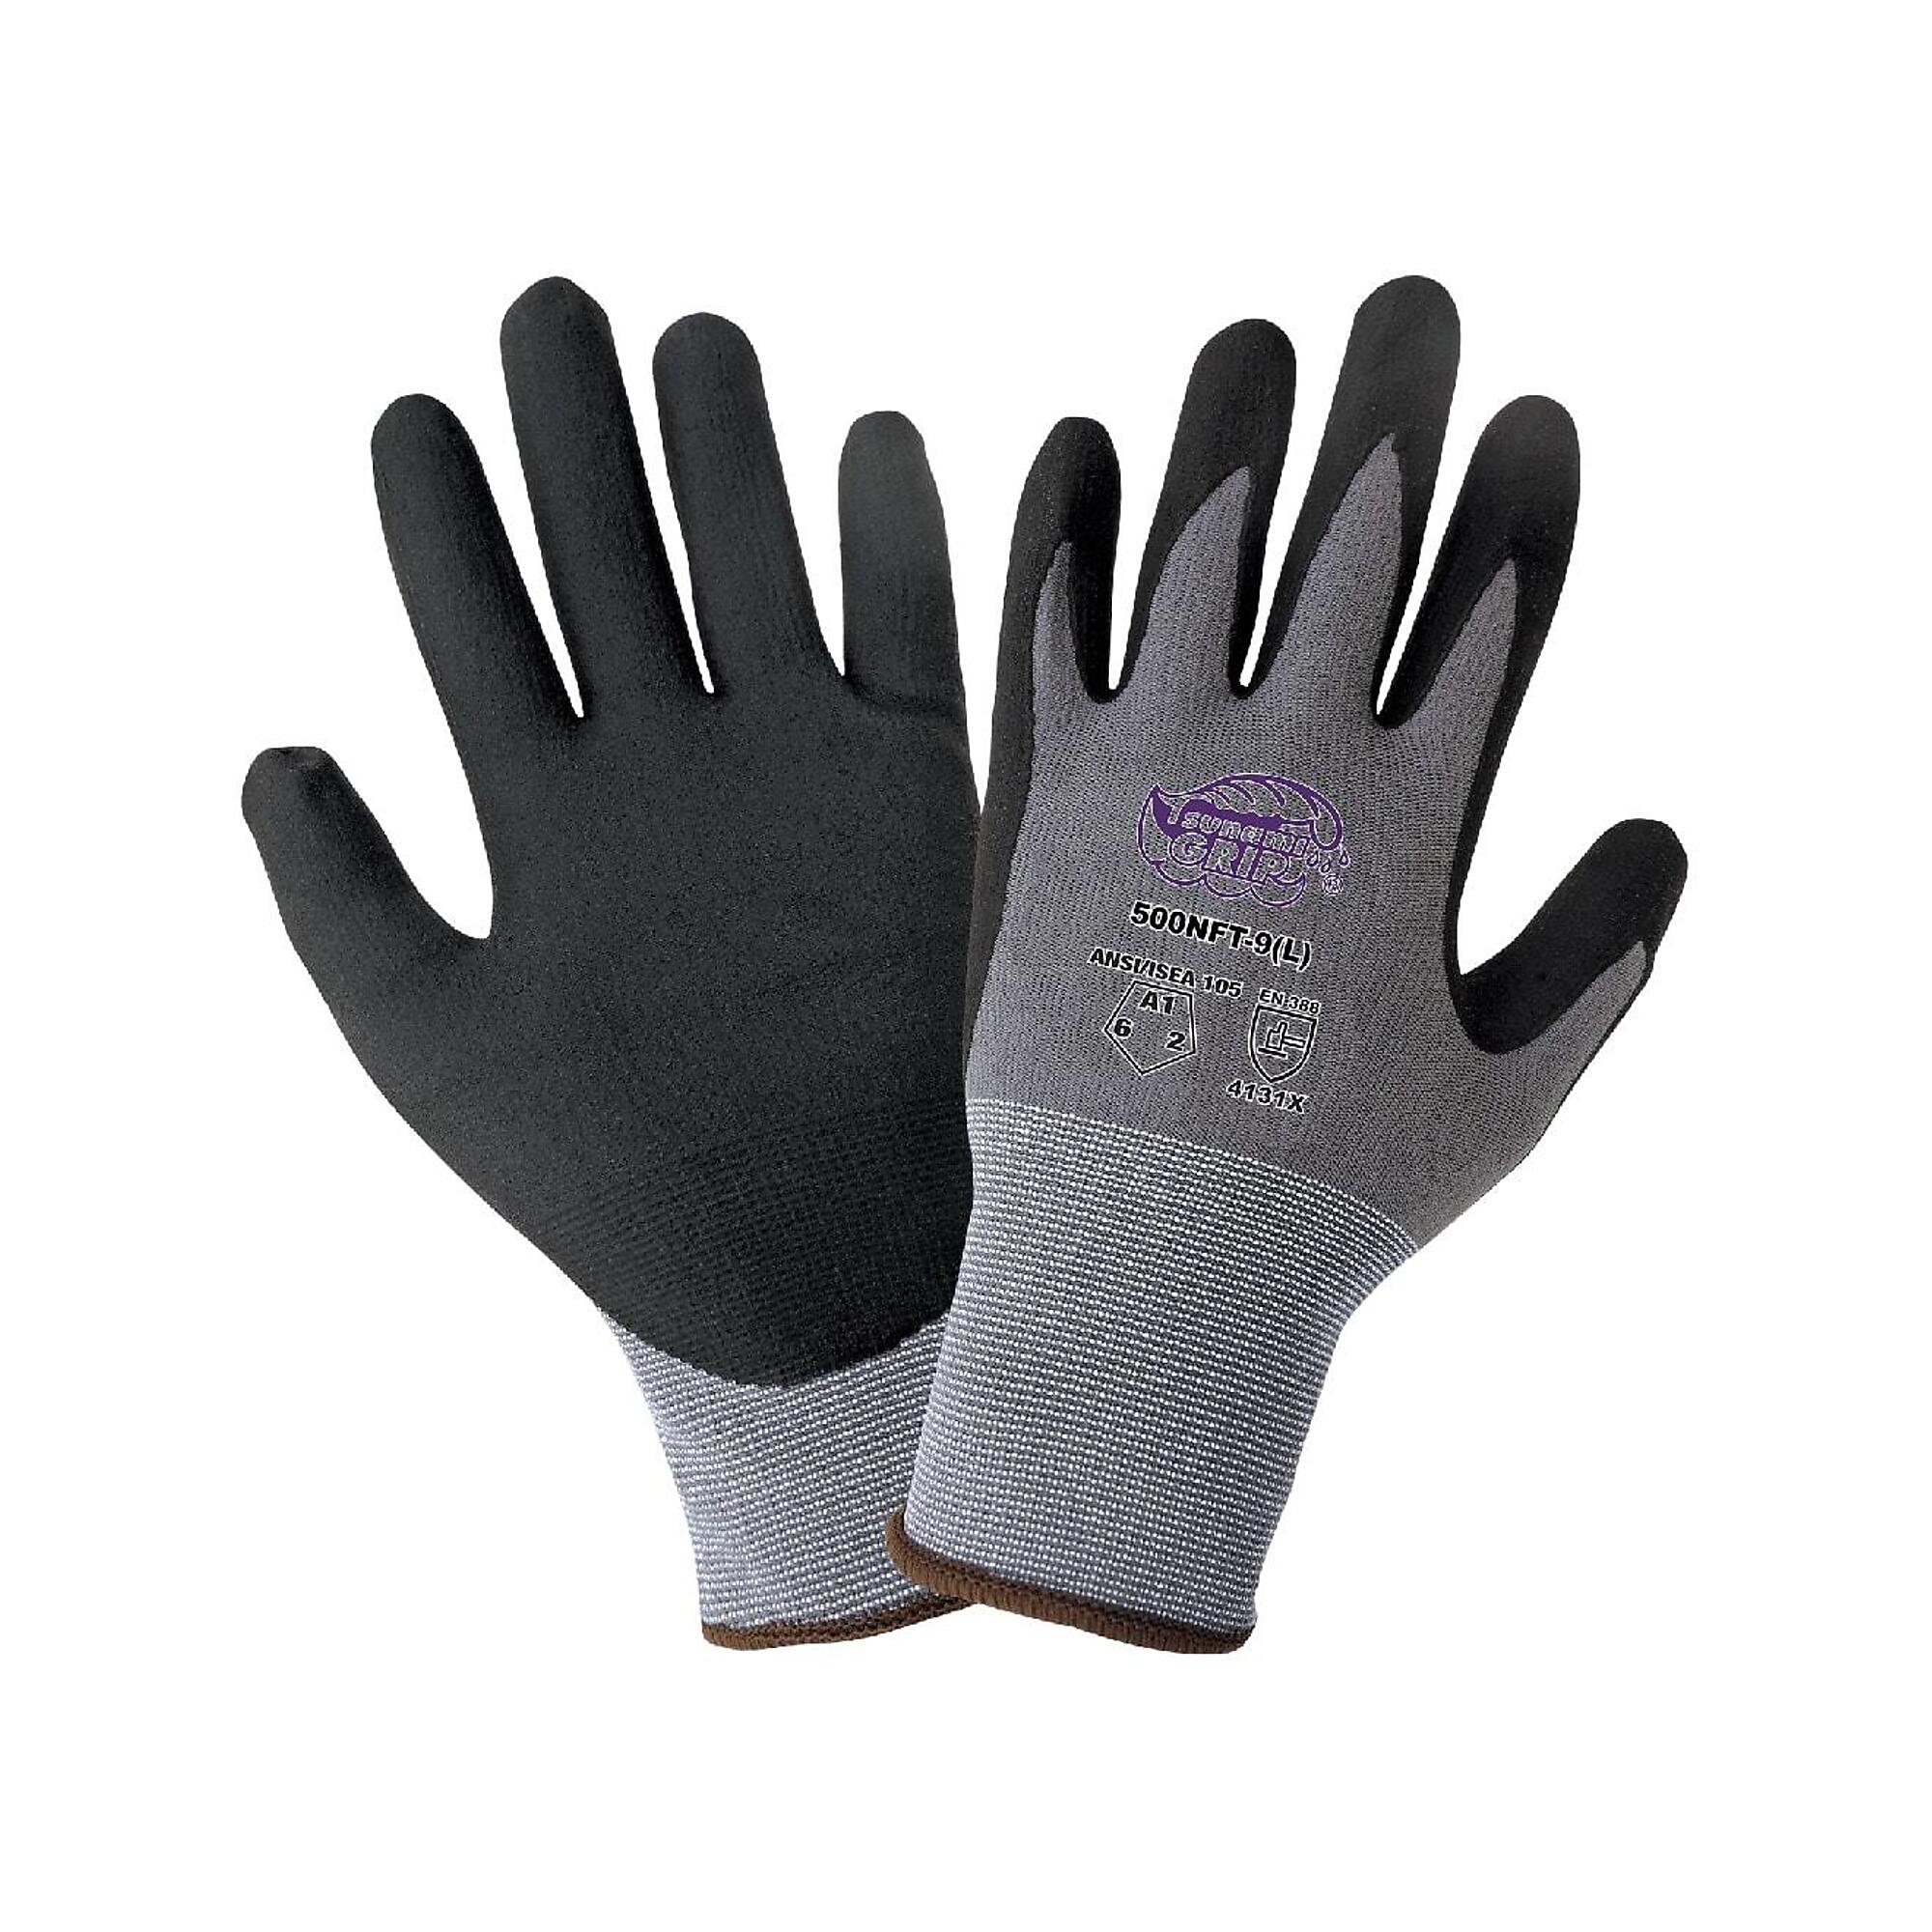 Global Glove Tsunami Grip , Gray, Black Nitrile Foam Palm, Cut Resist A1 Gloves- 12 Pair, Size S, Color Gray/Black, Included (qty.) 12 Model 500NFT-7(